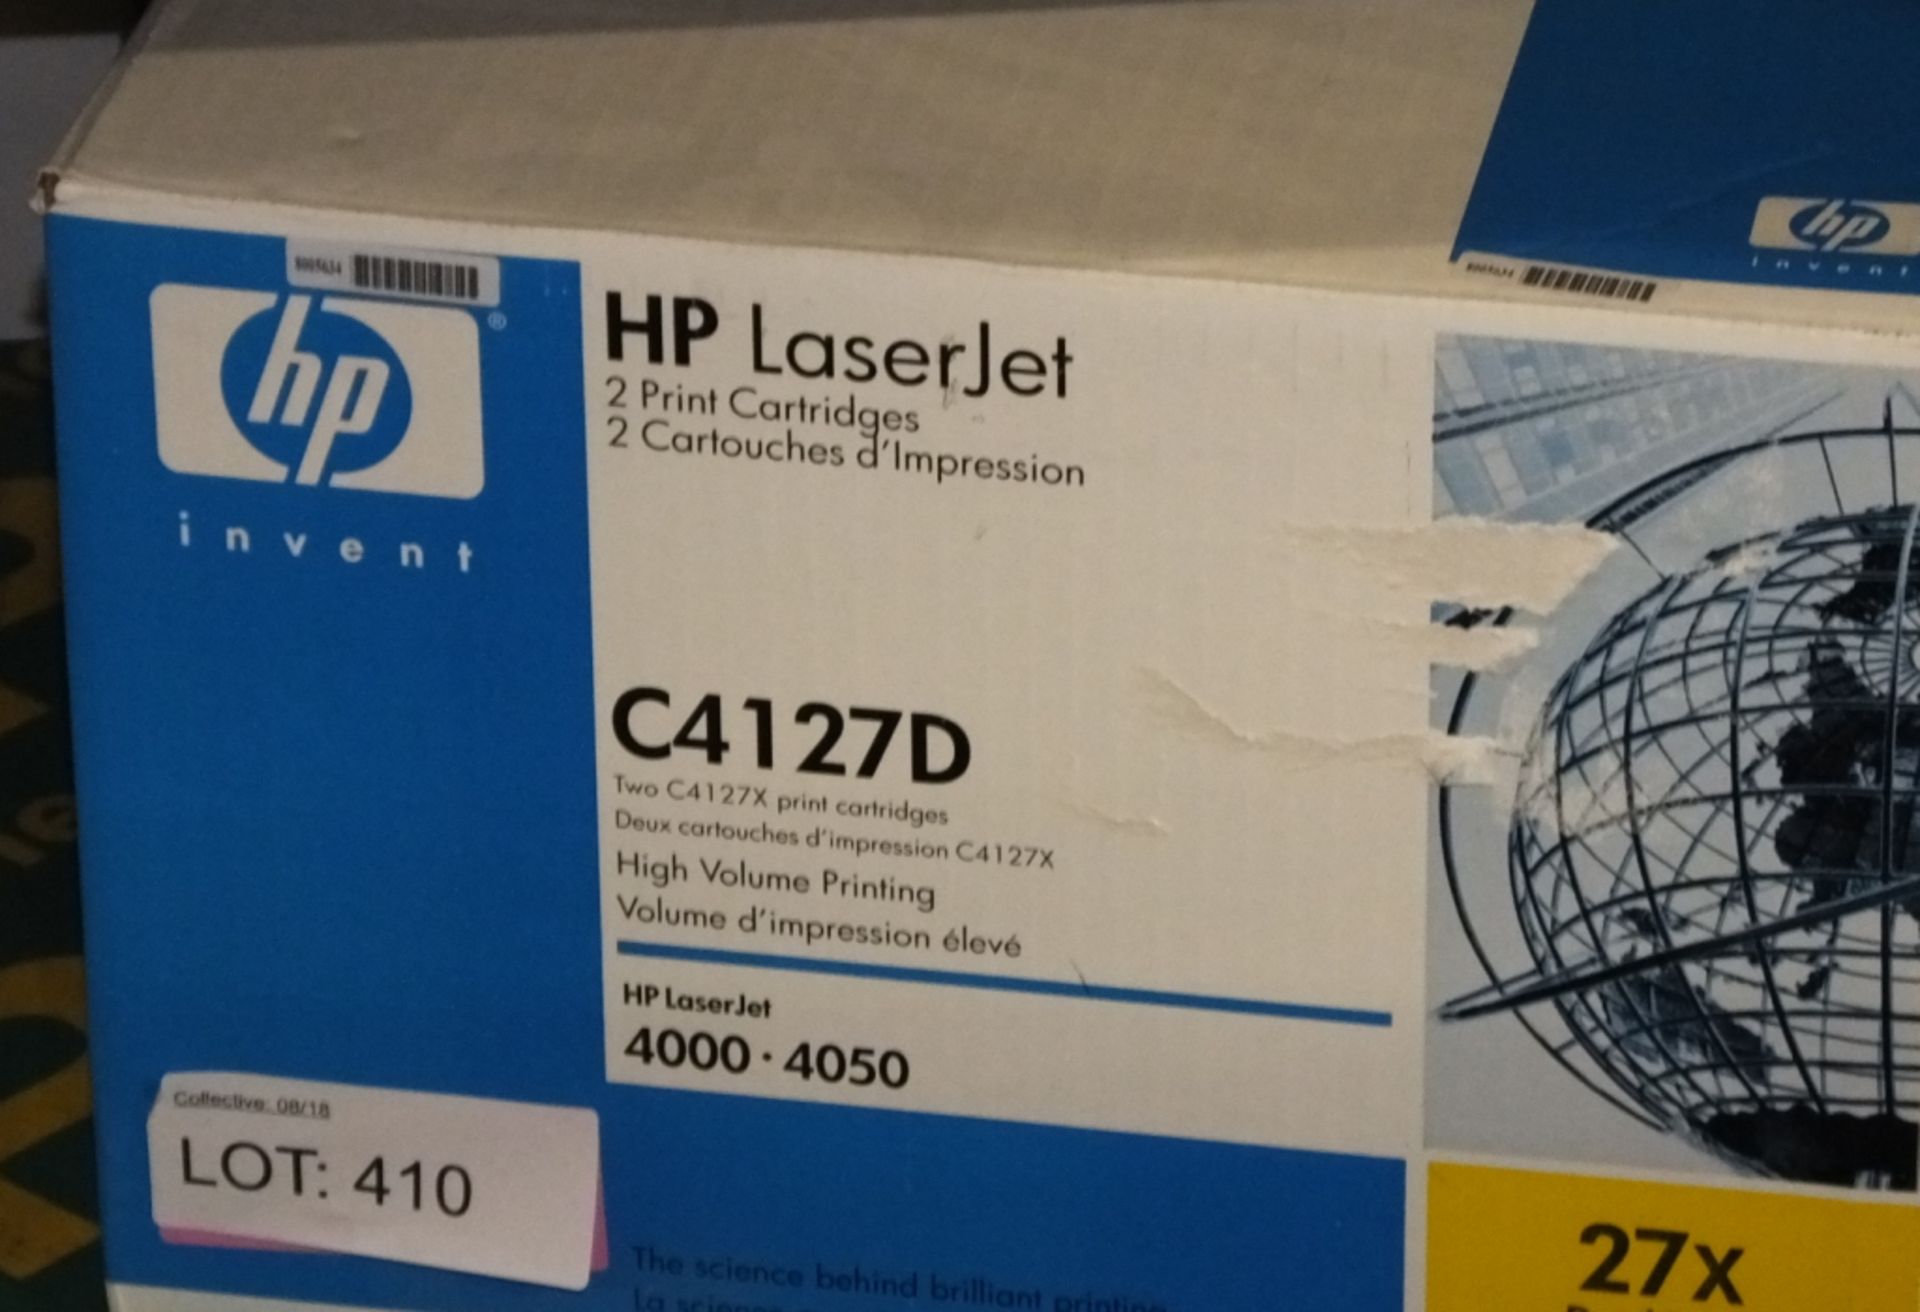 HP Laserjet 2 print cartridges C4127D - 27x Dual Pack - Image 2 of 3